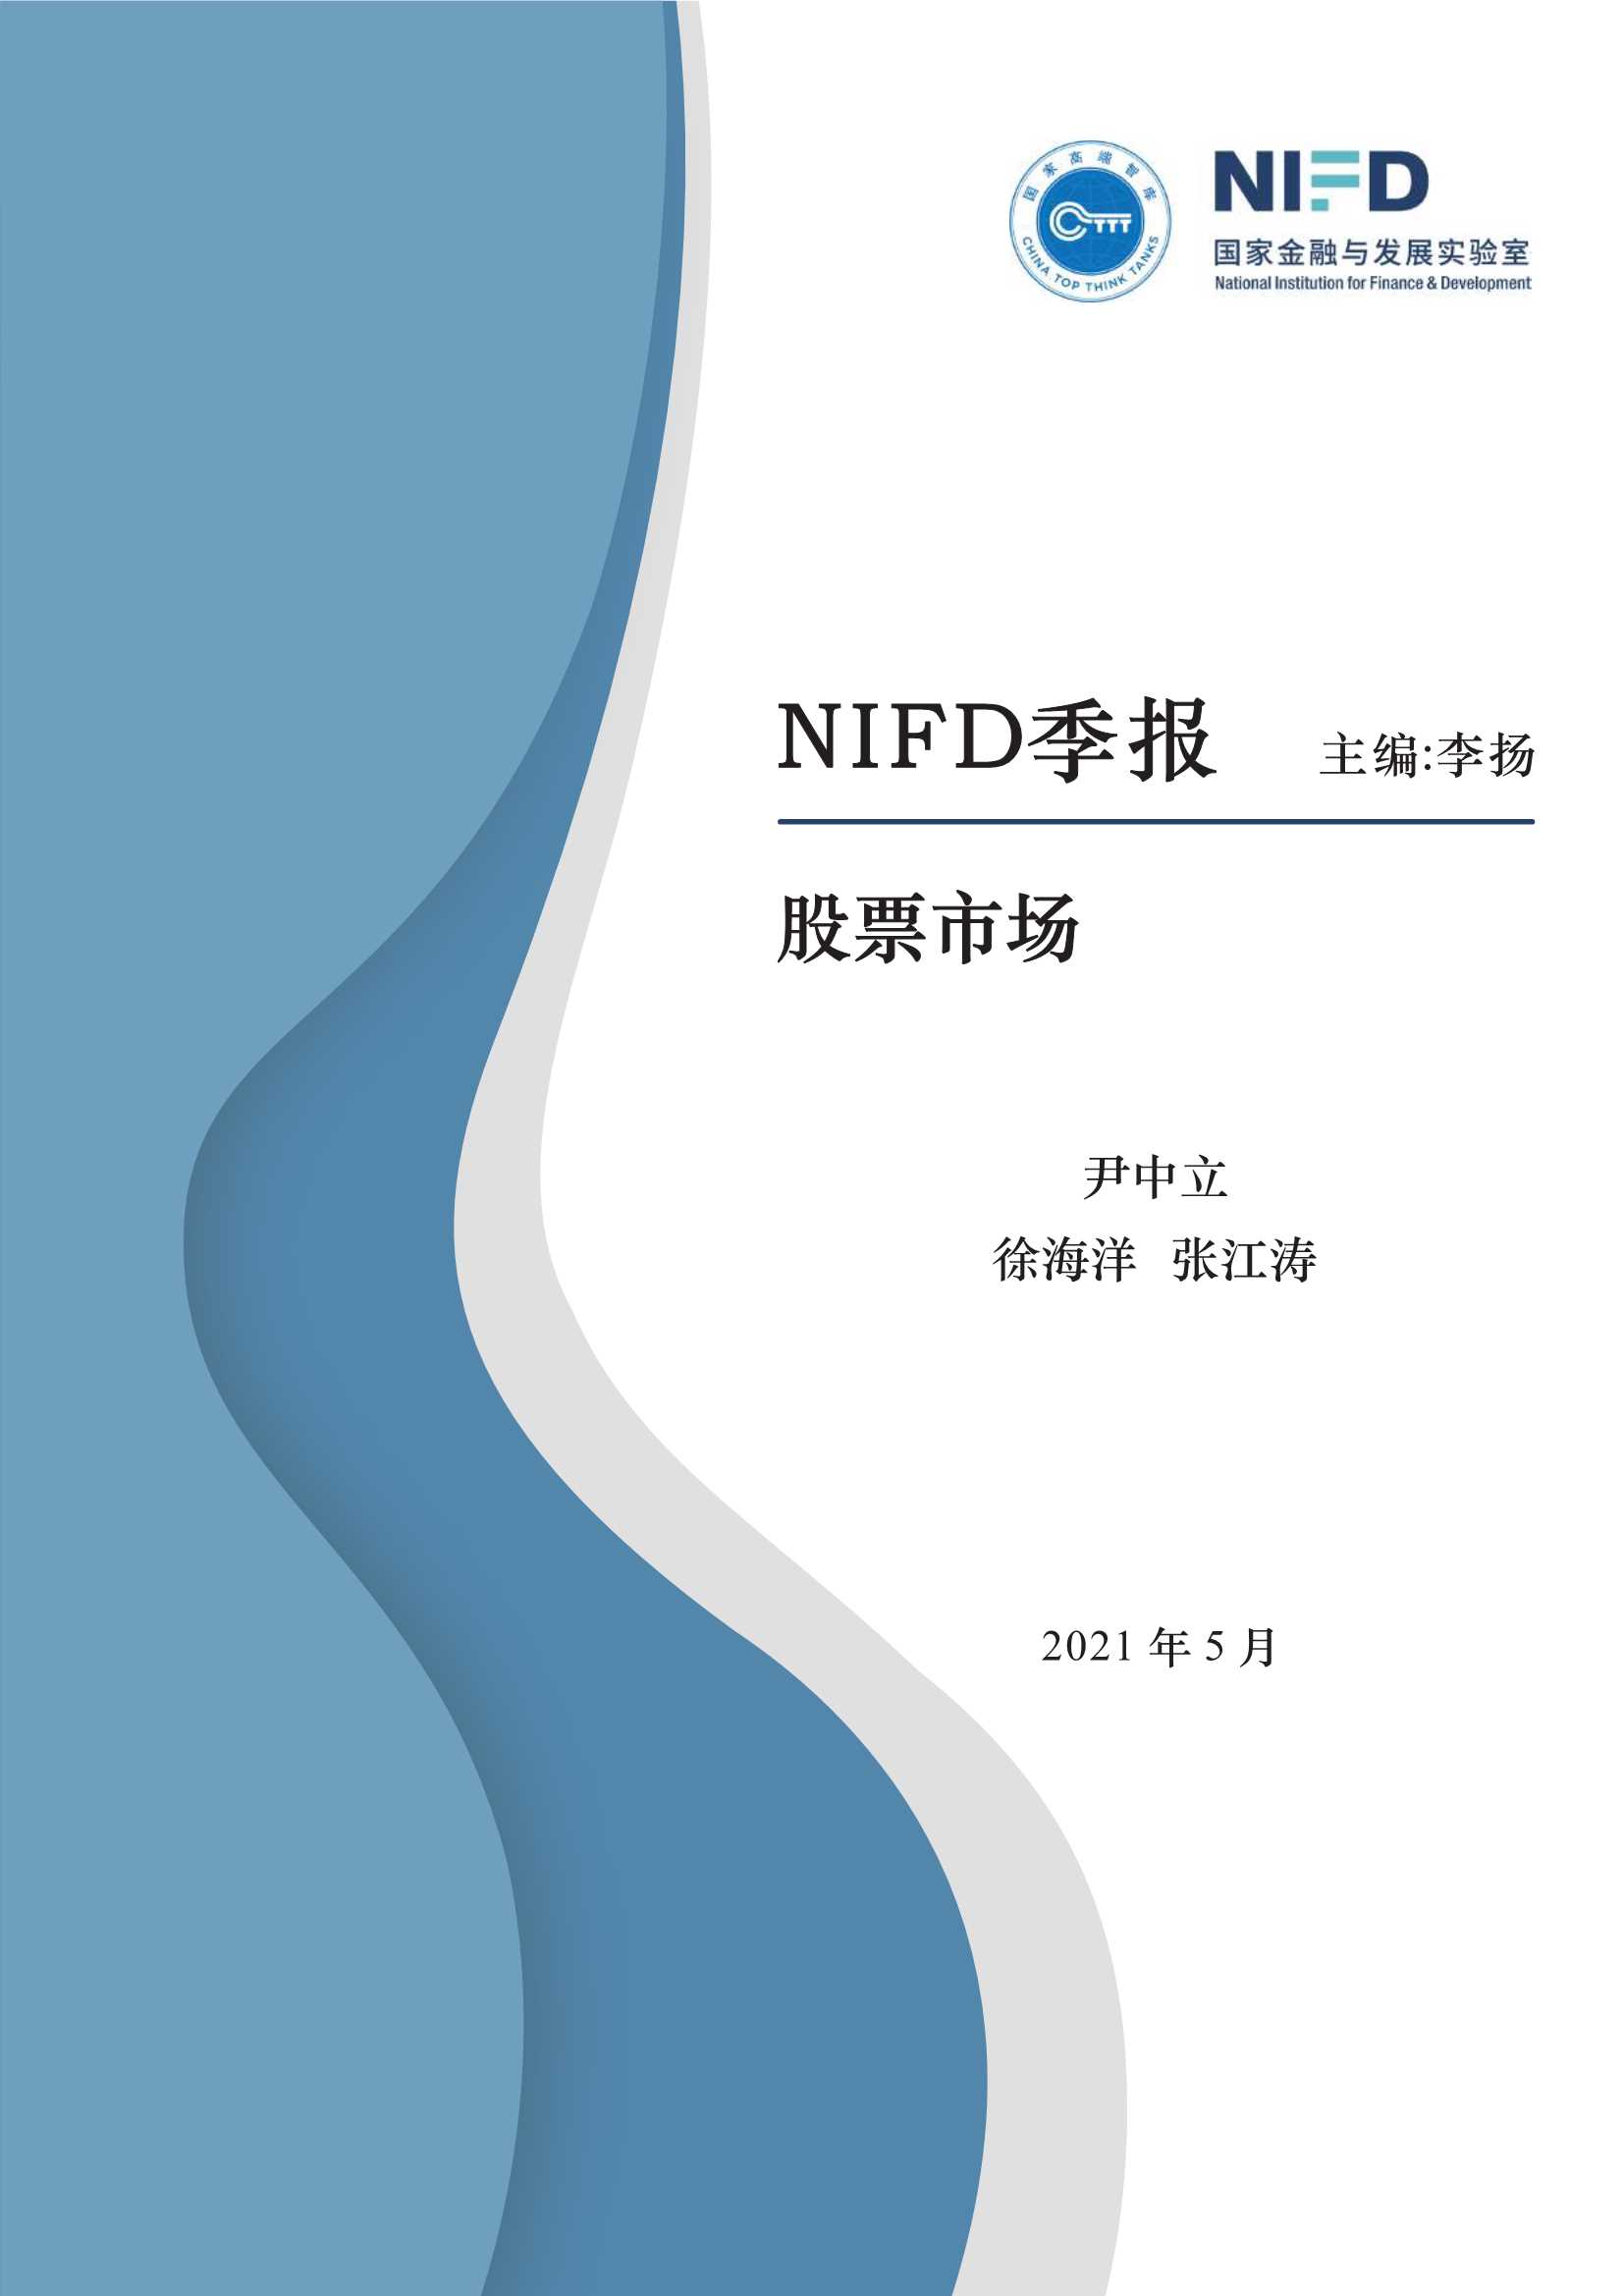 NIFD-2021Q1股票市场-2021.05-16页